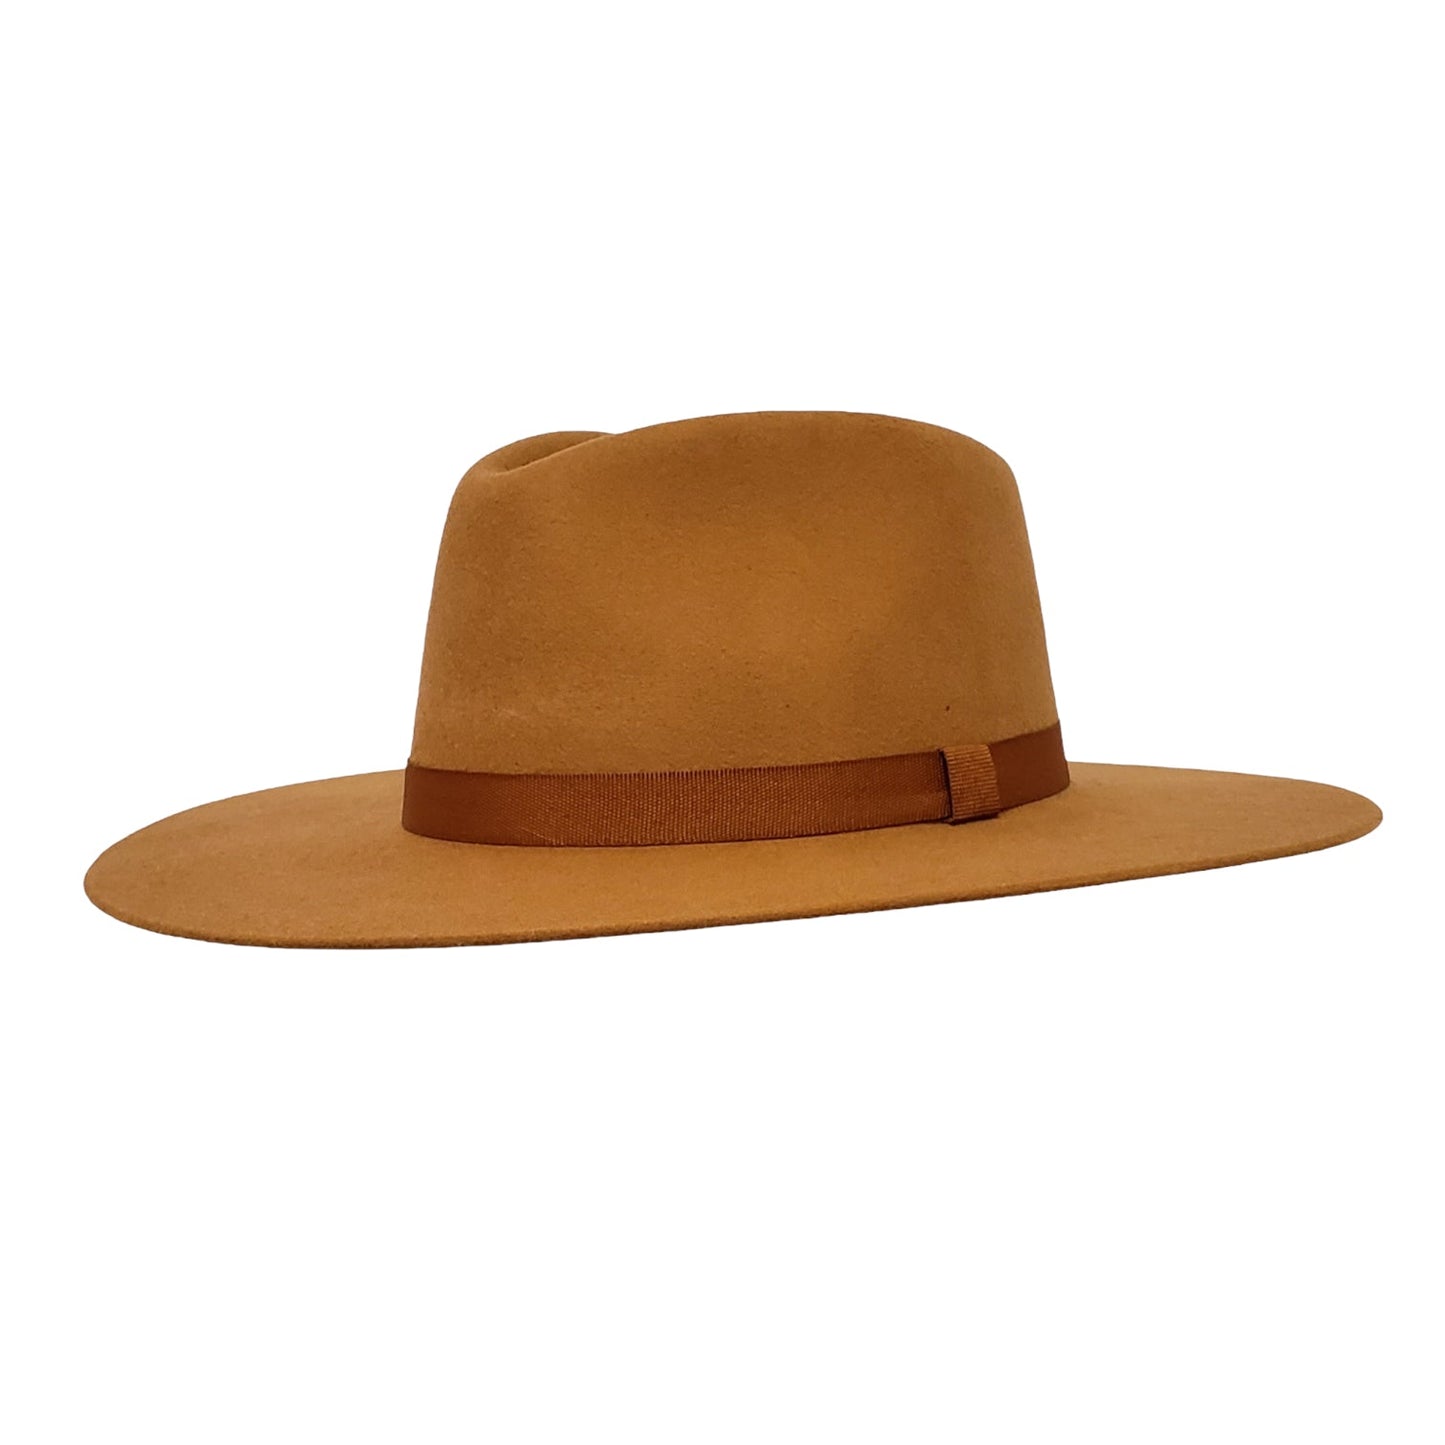 Tobacco brown cashmere/wool flat brim western  hat